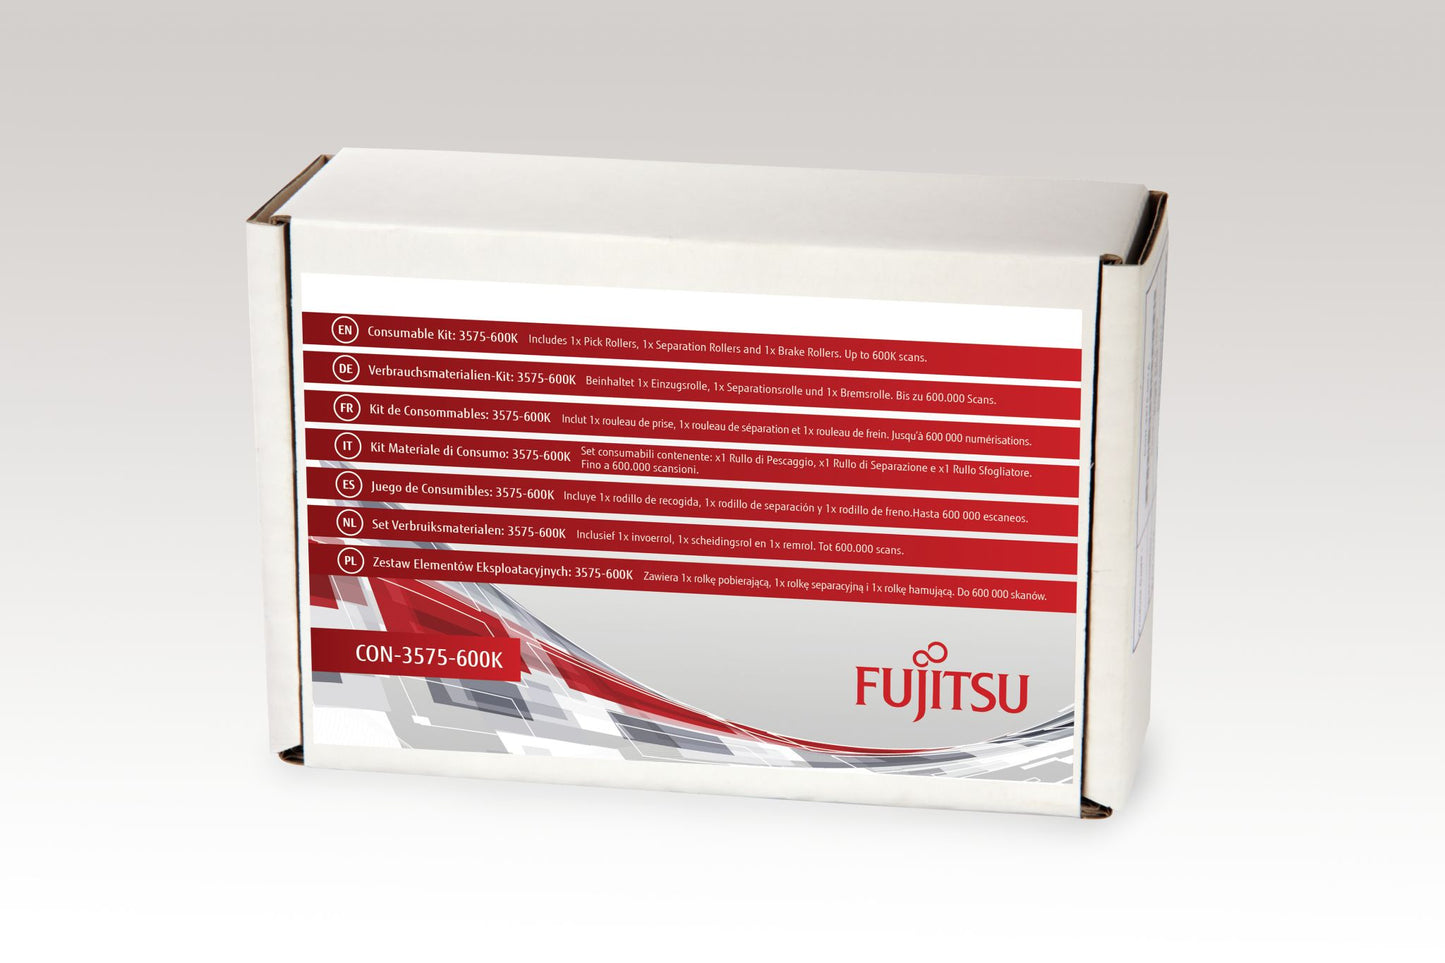 Fujitsu 3575-600K Consumable kit